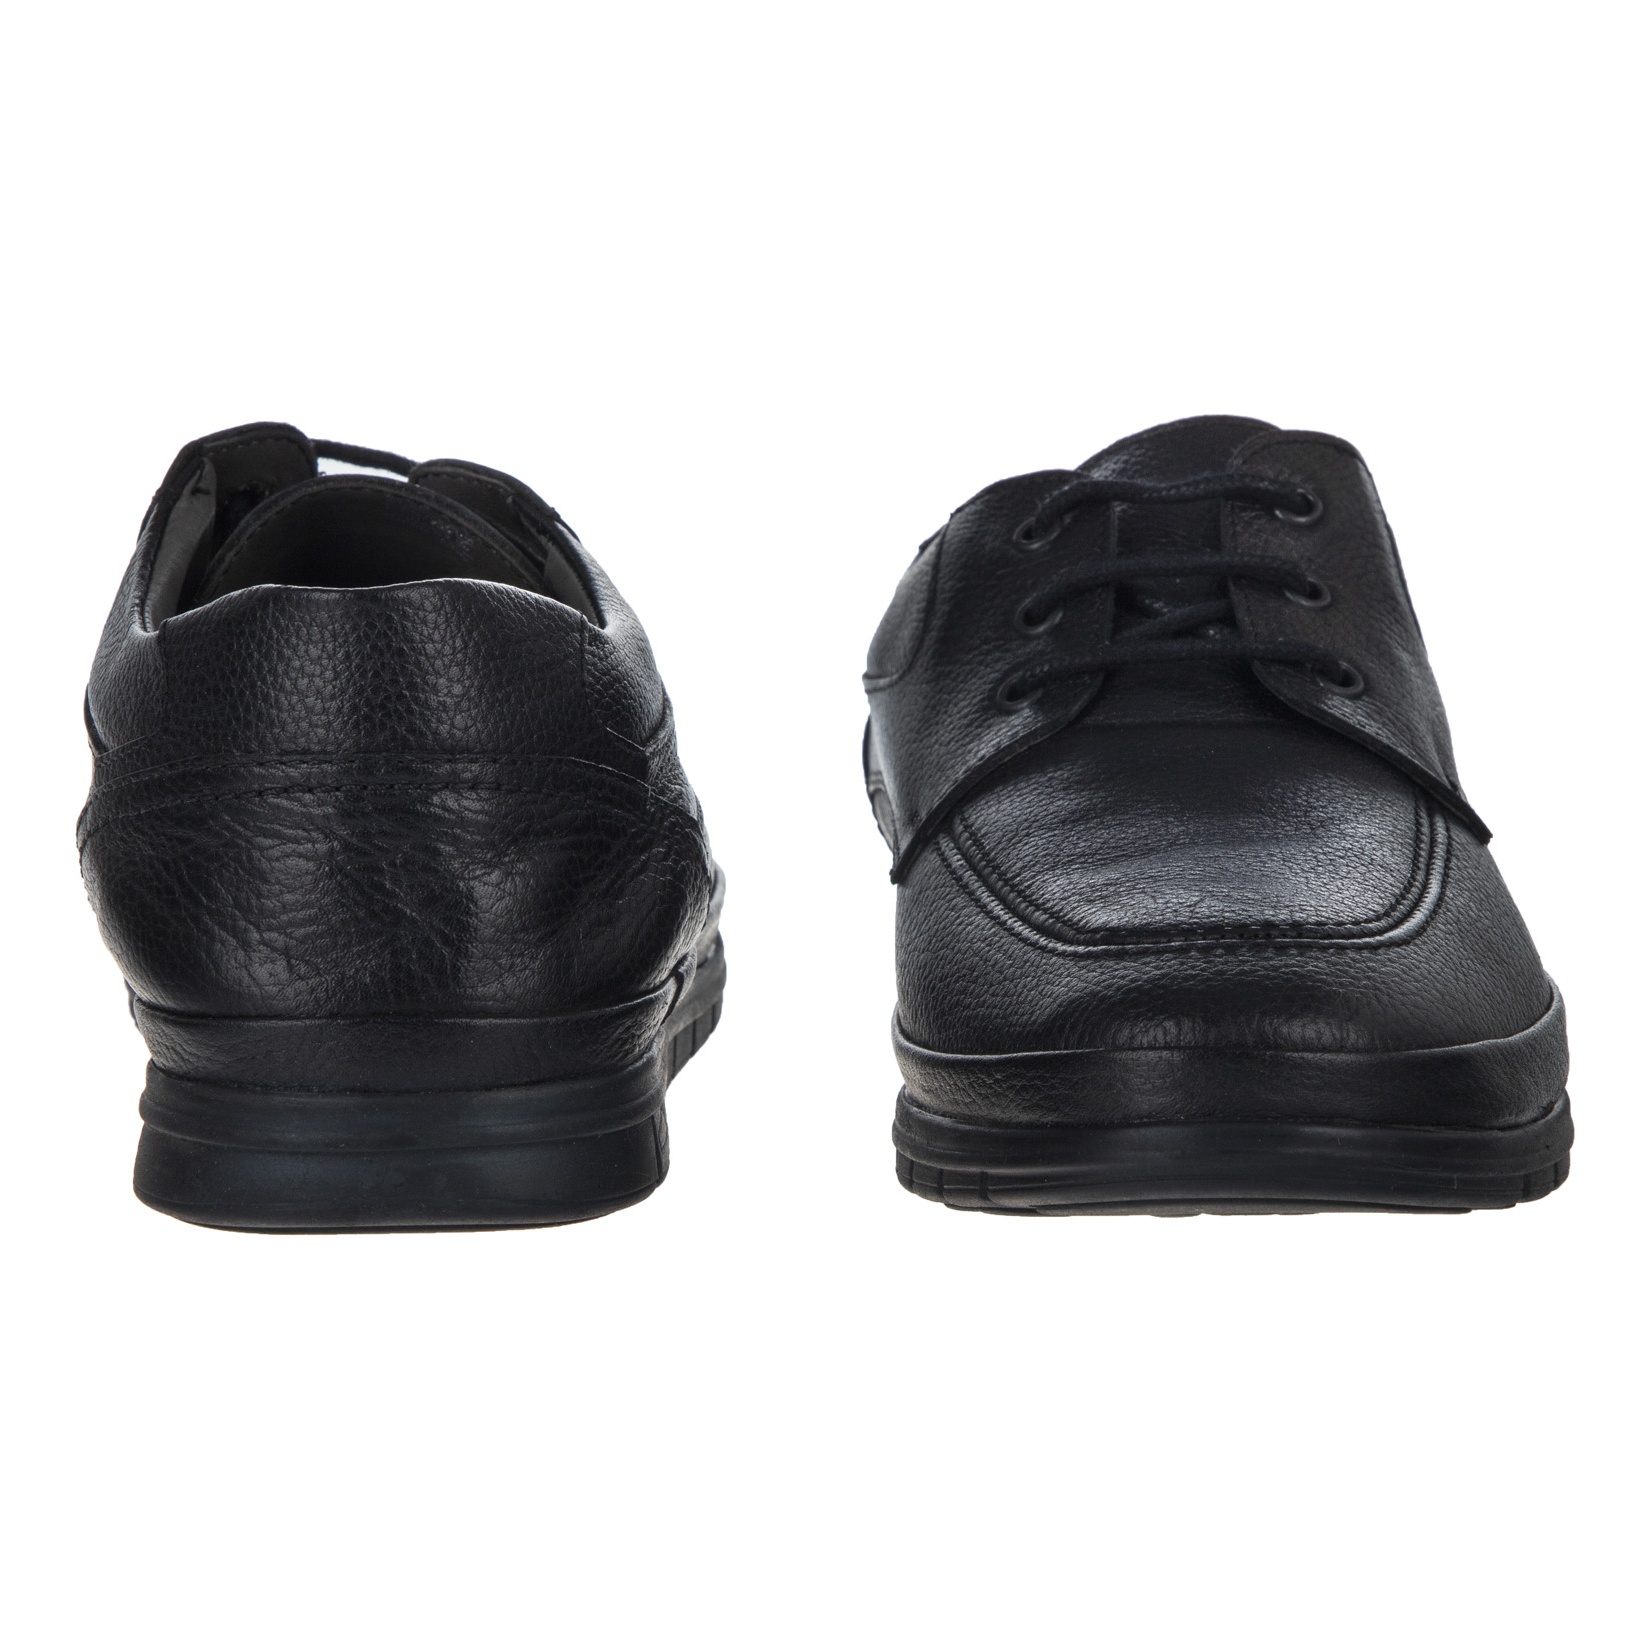 کفش روزمره مردانه پولاریس مدل 100296894-101 - مشکی - 5